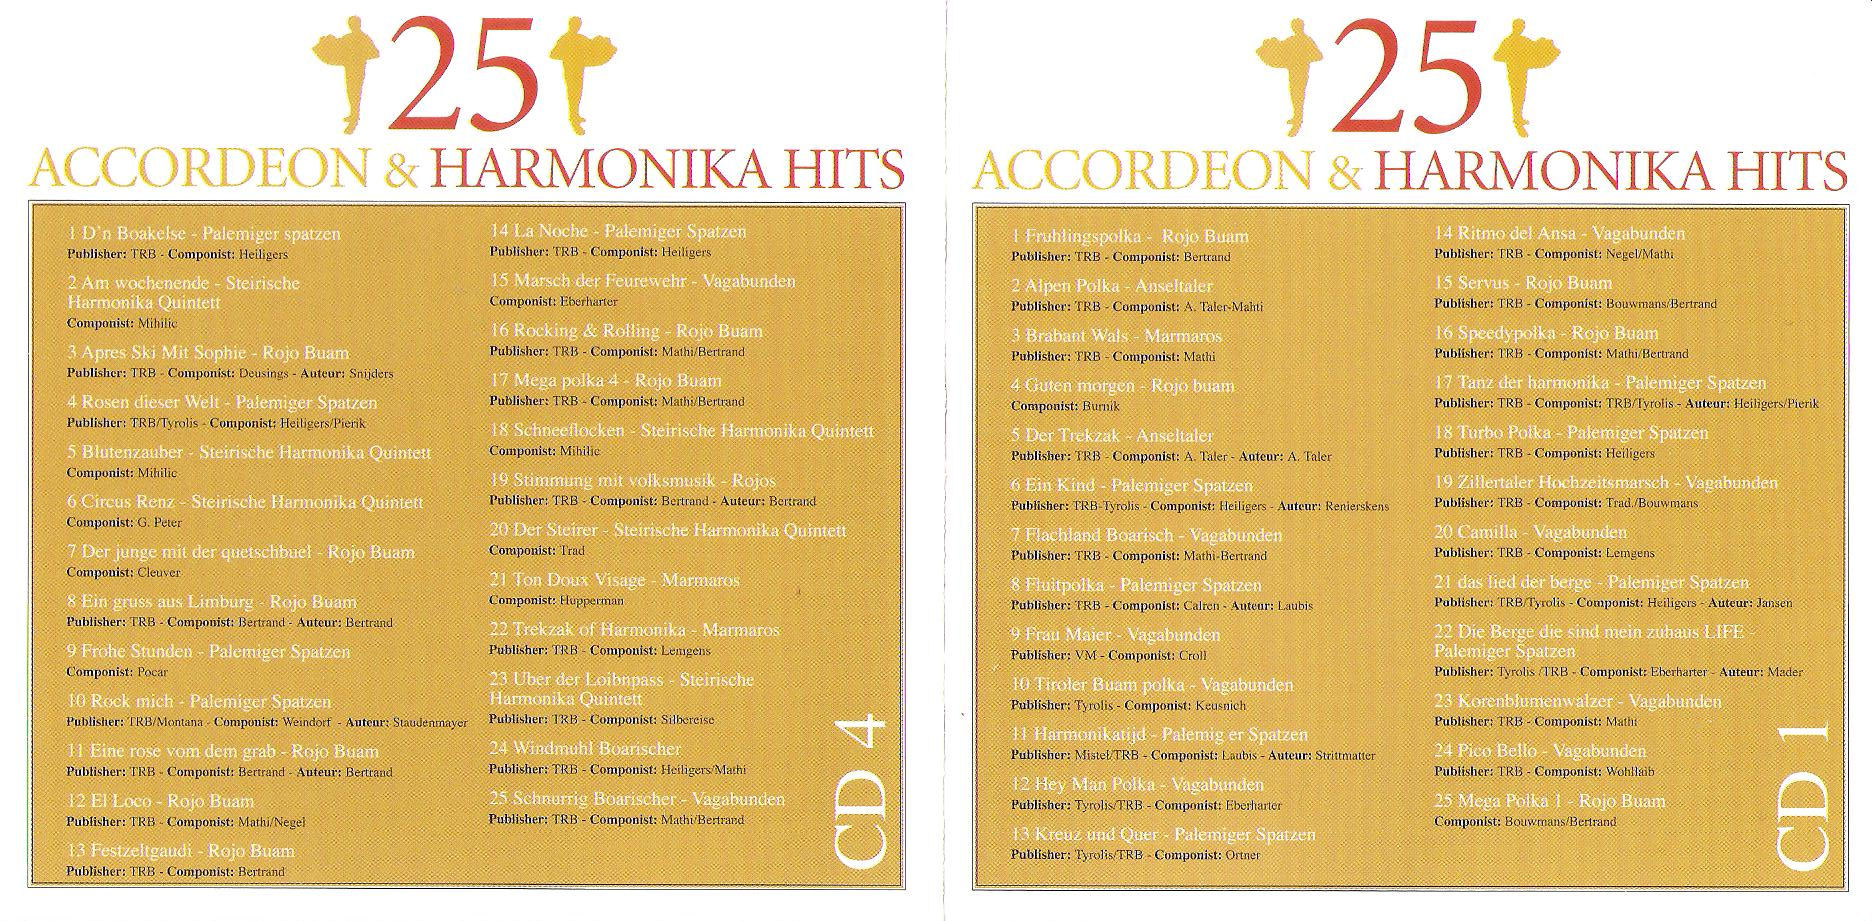 VA  100 Accordeon  Harmonika Hits booklet1 